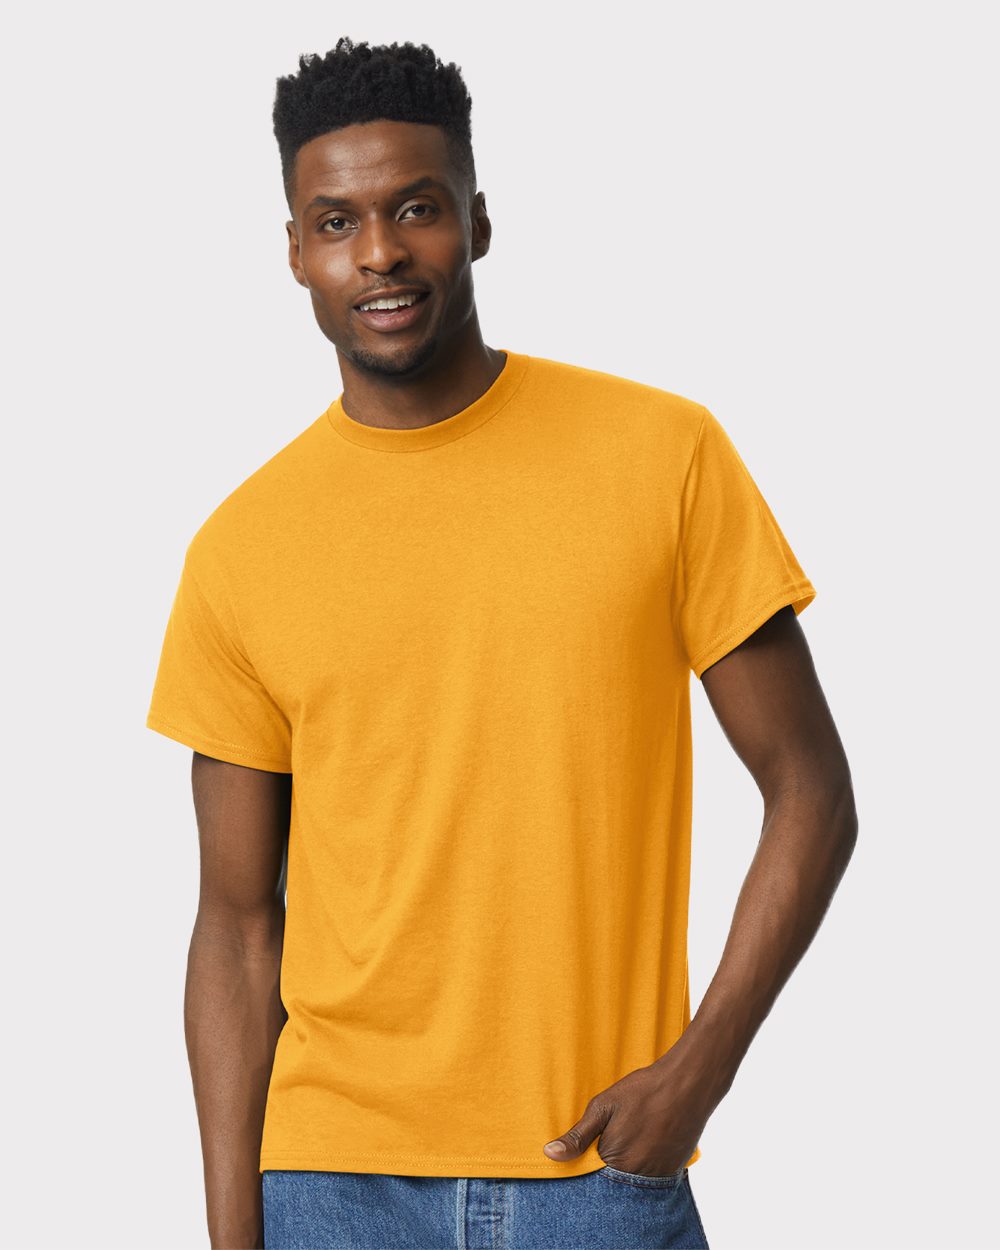 orange t shirt front and back